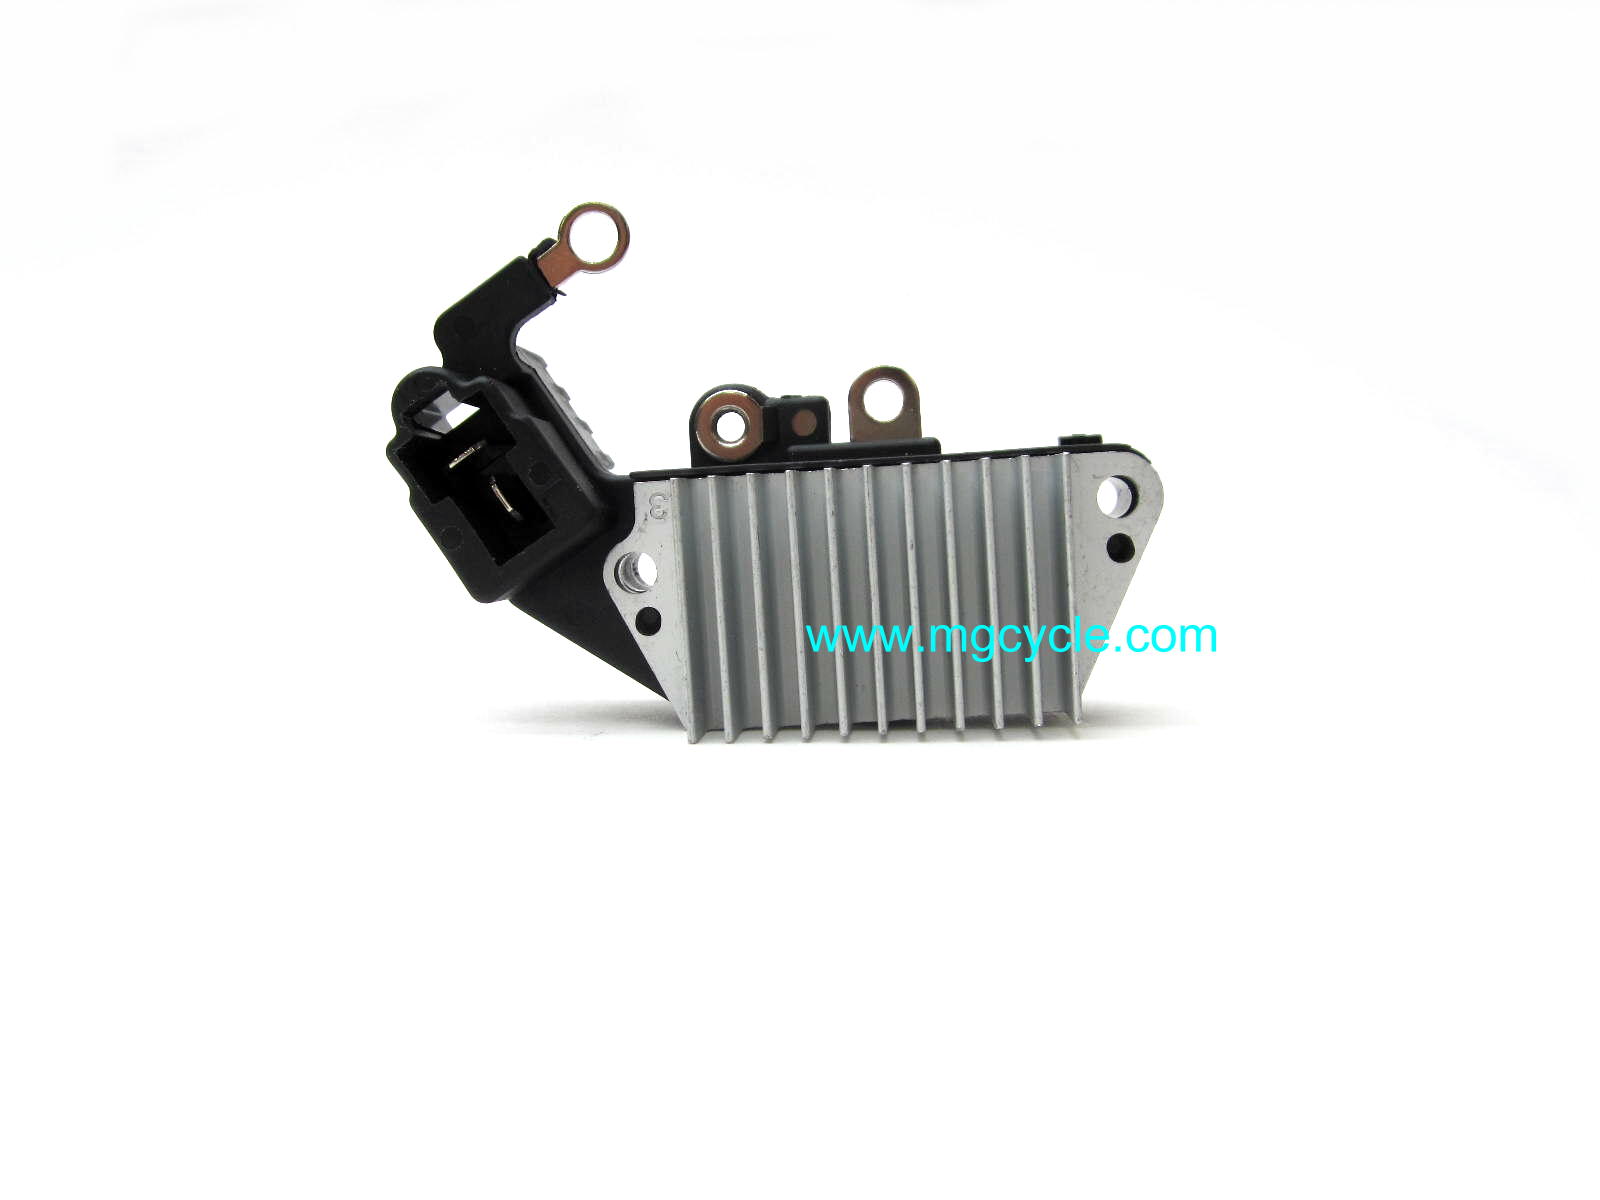 Voltage regulator Denso alternator early CARC models - Click Image to Close